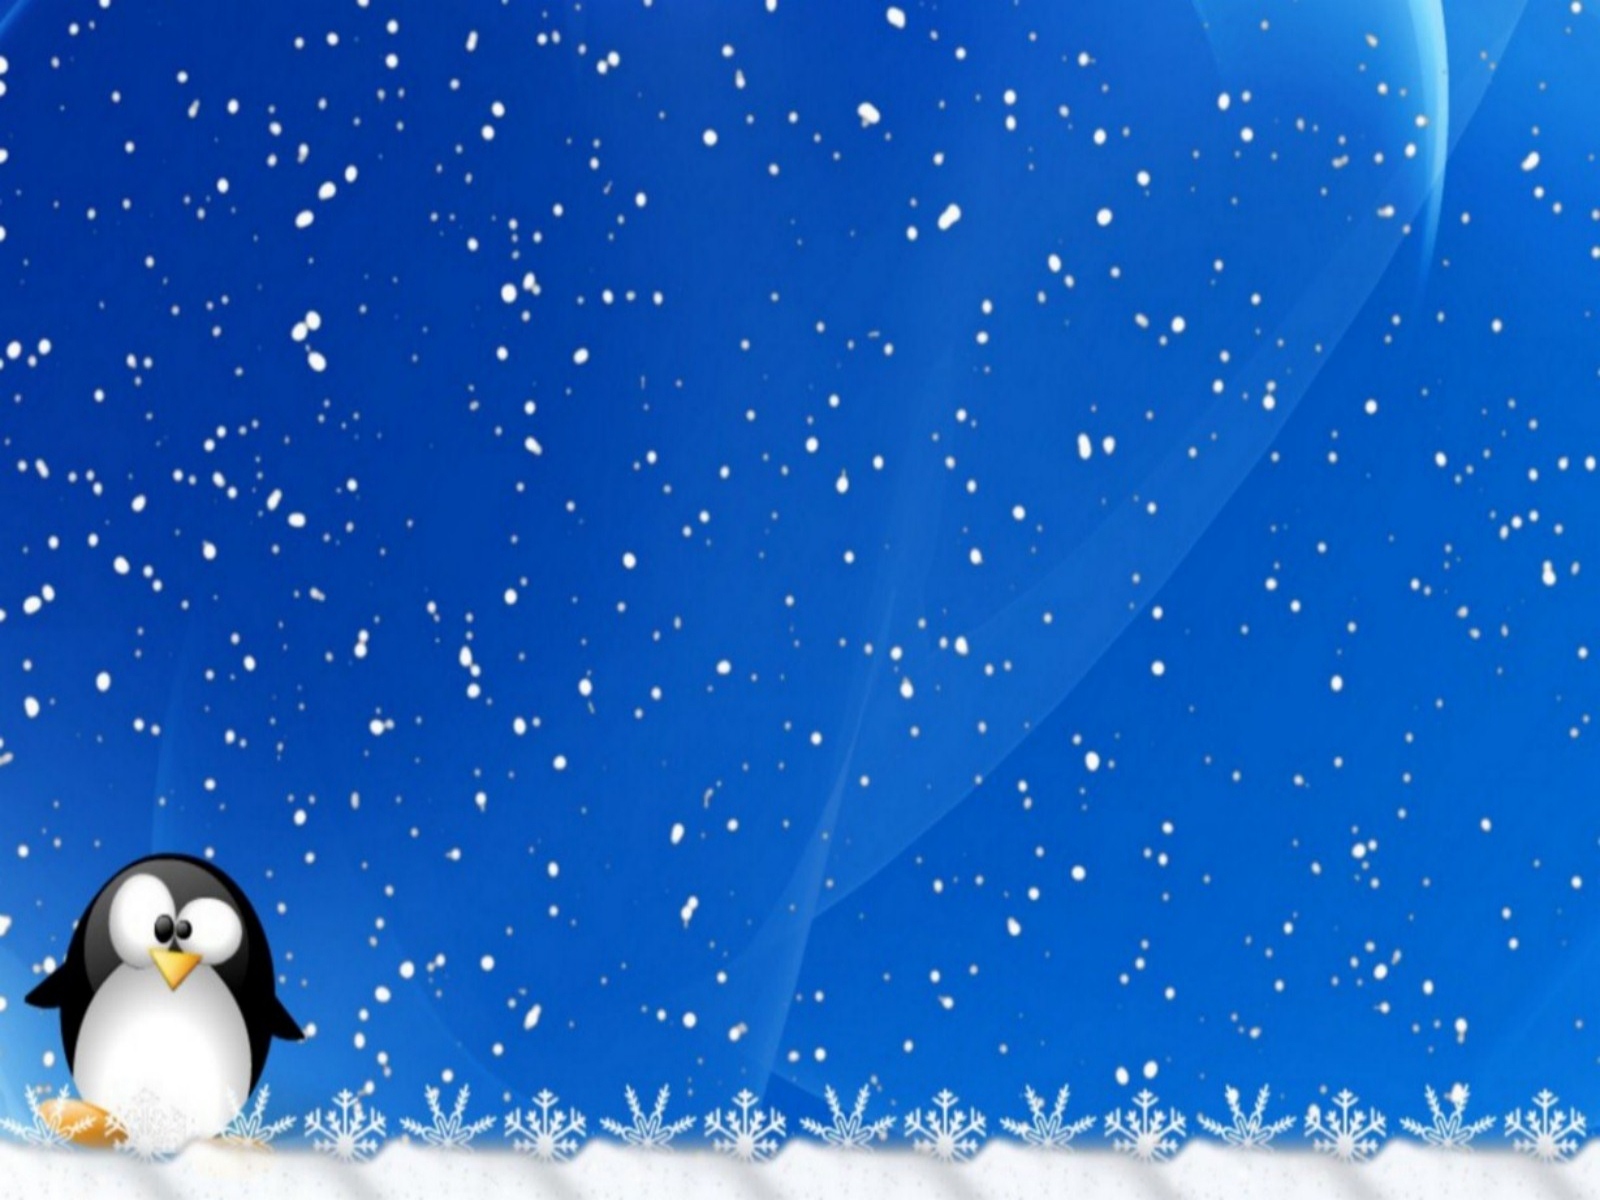 Christmas Winter Idyll Desktop Background Wallpaper Image